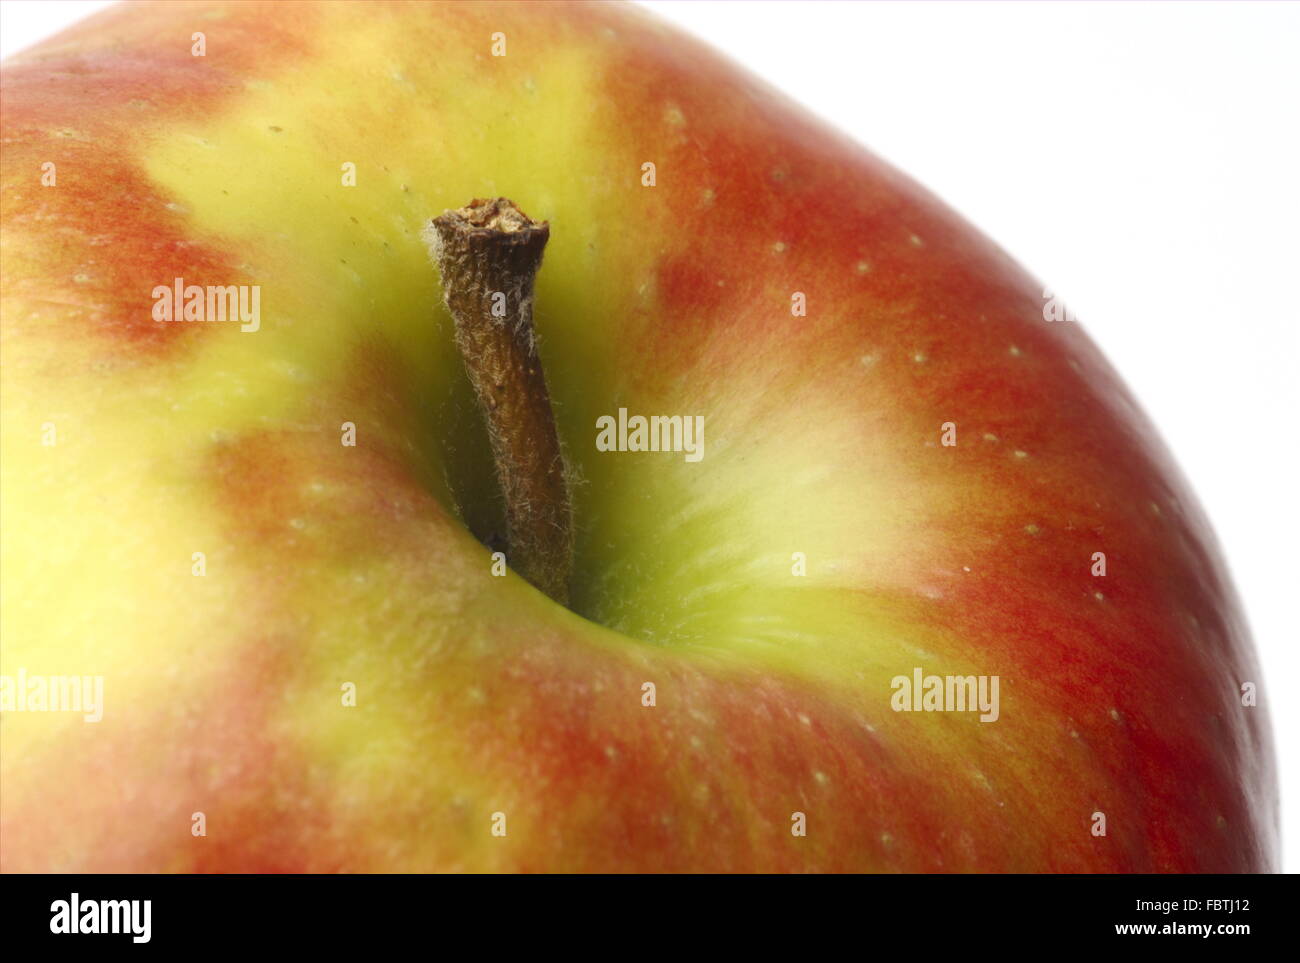 apple detail Stock Photo